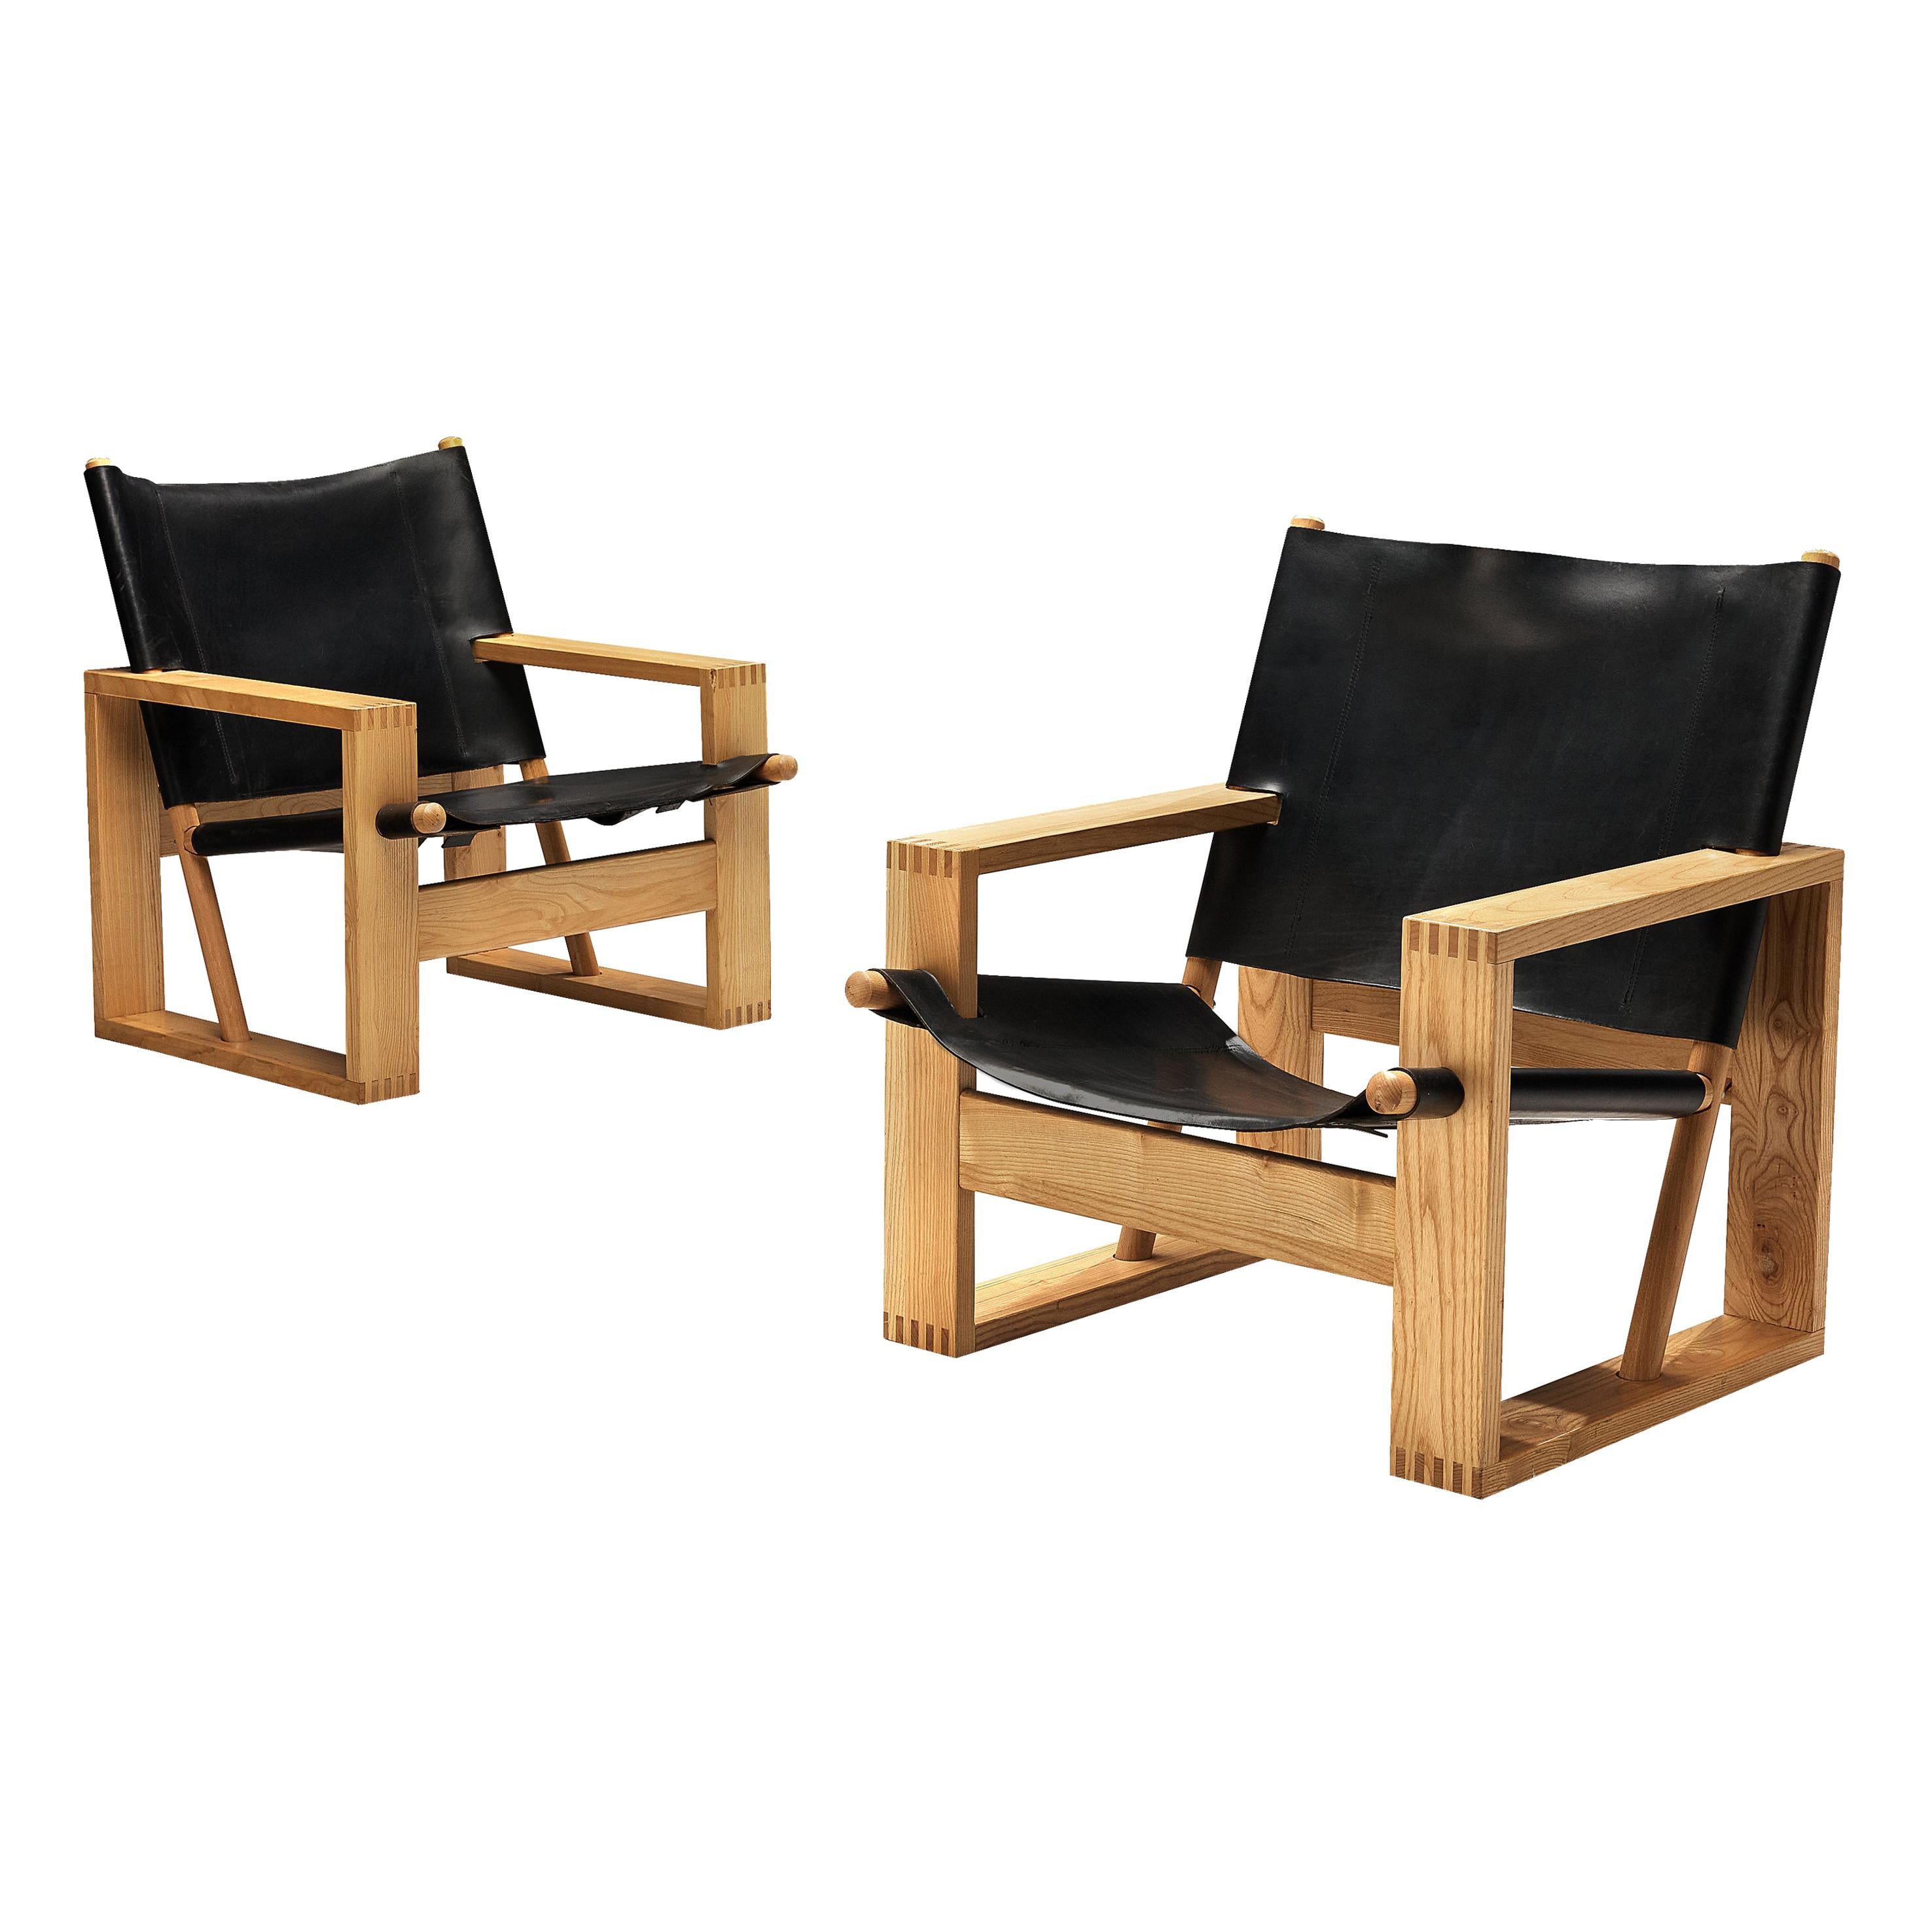 Ate van Apeldoorn Pair of Lounge Chairs in Ash and Black Leather